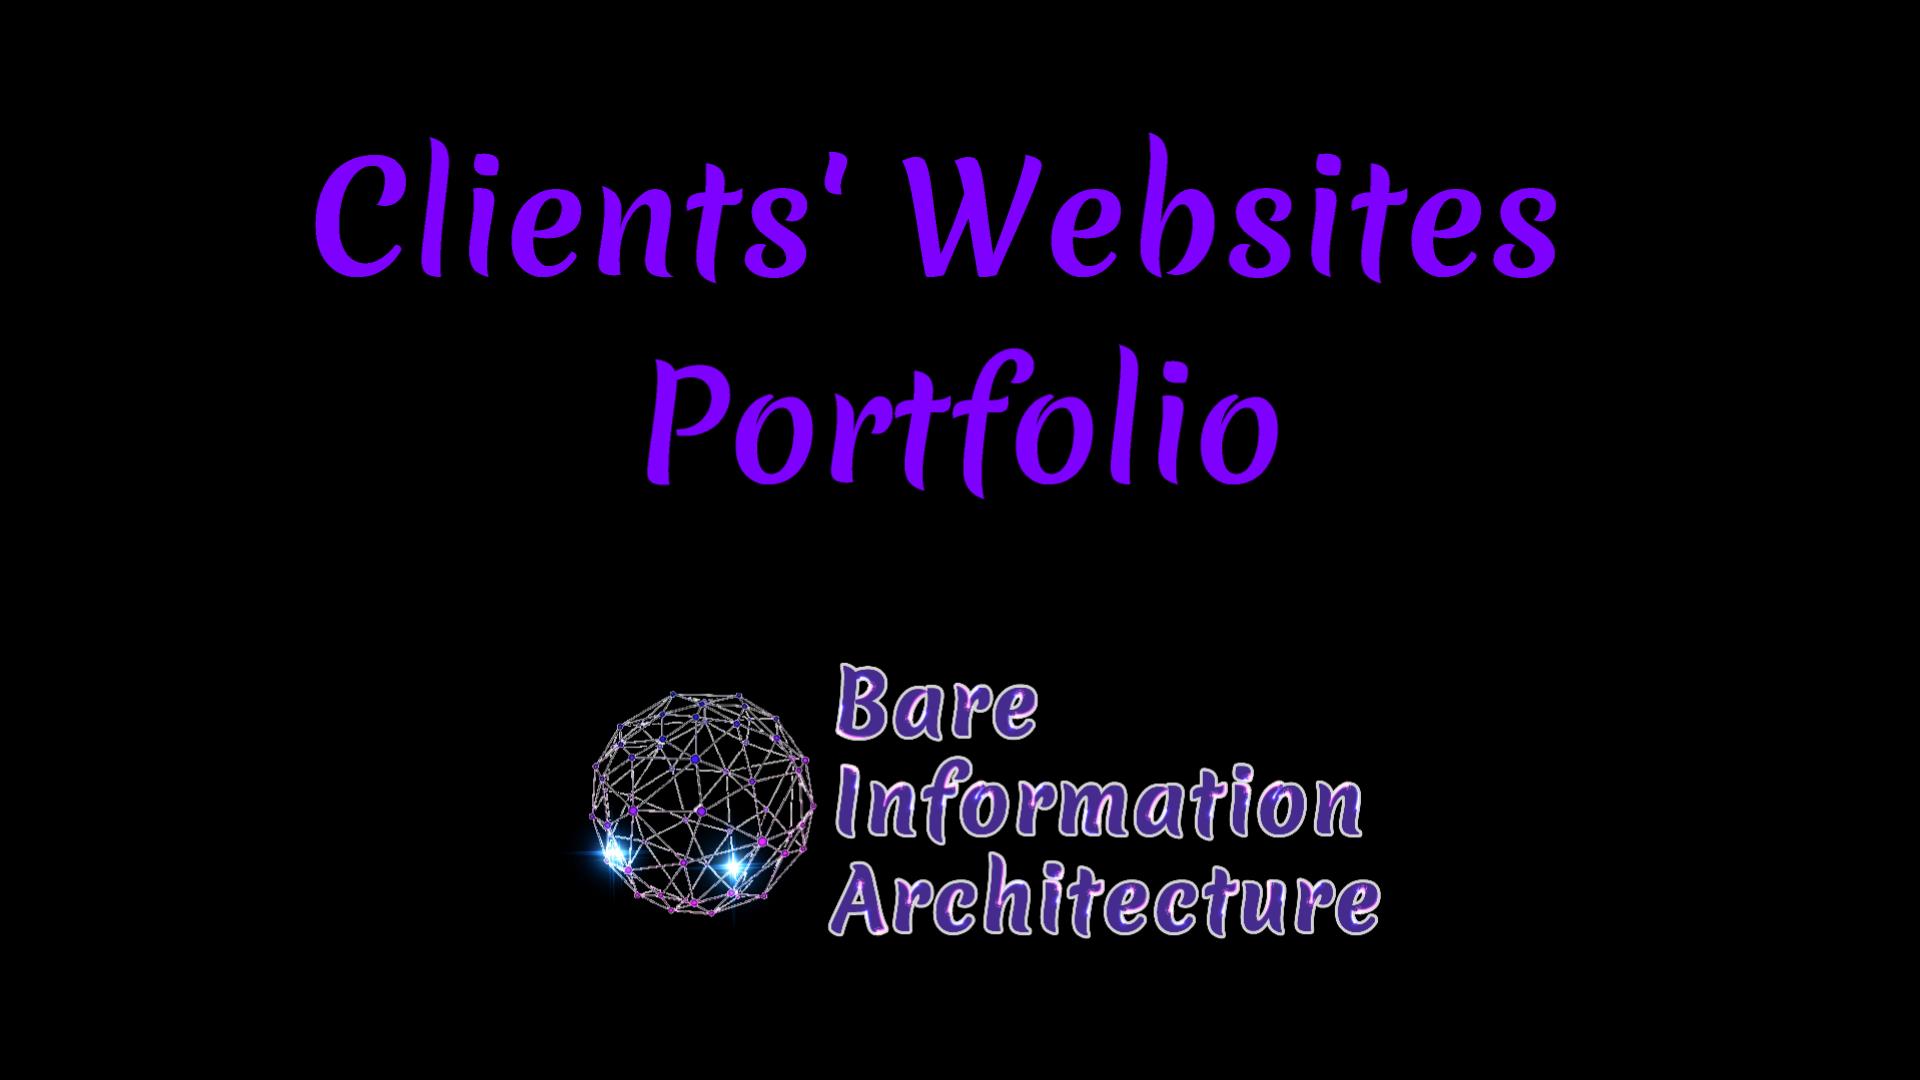 Clients' Websites Portfolio